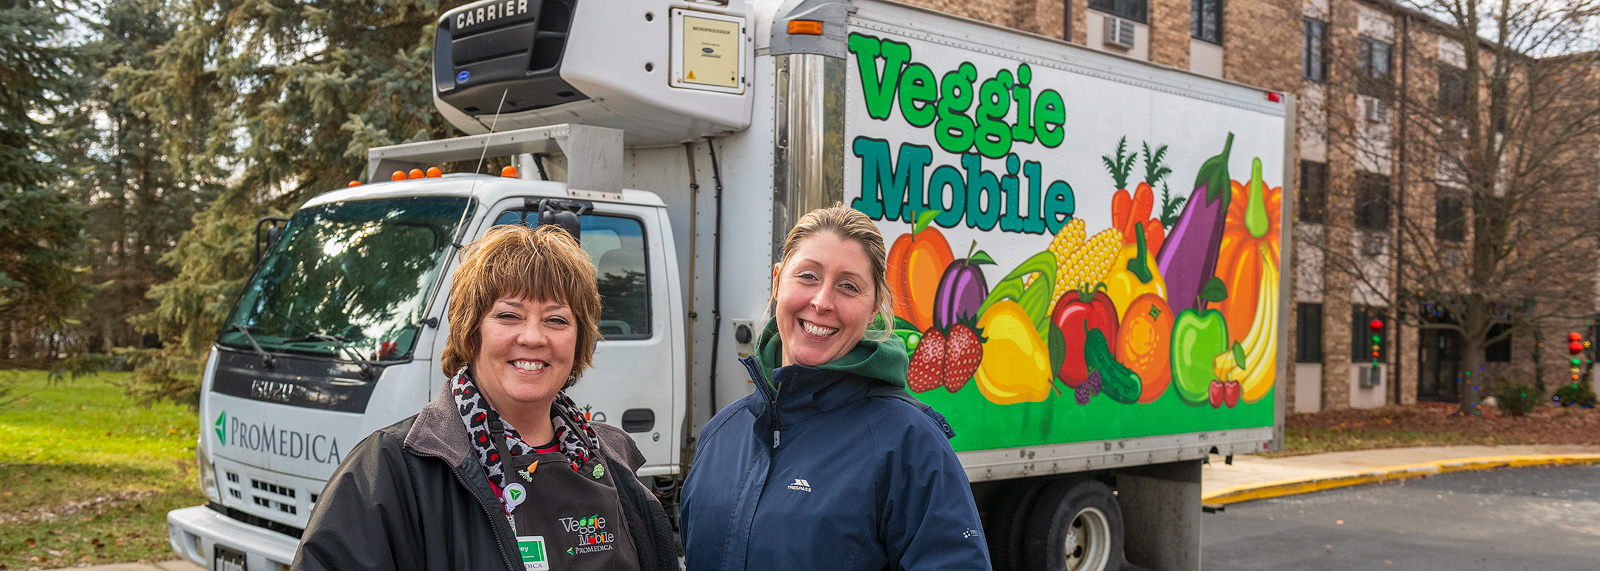 The Veggie Mobile.